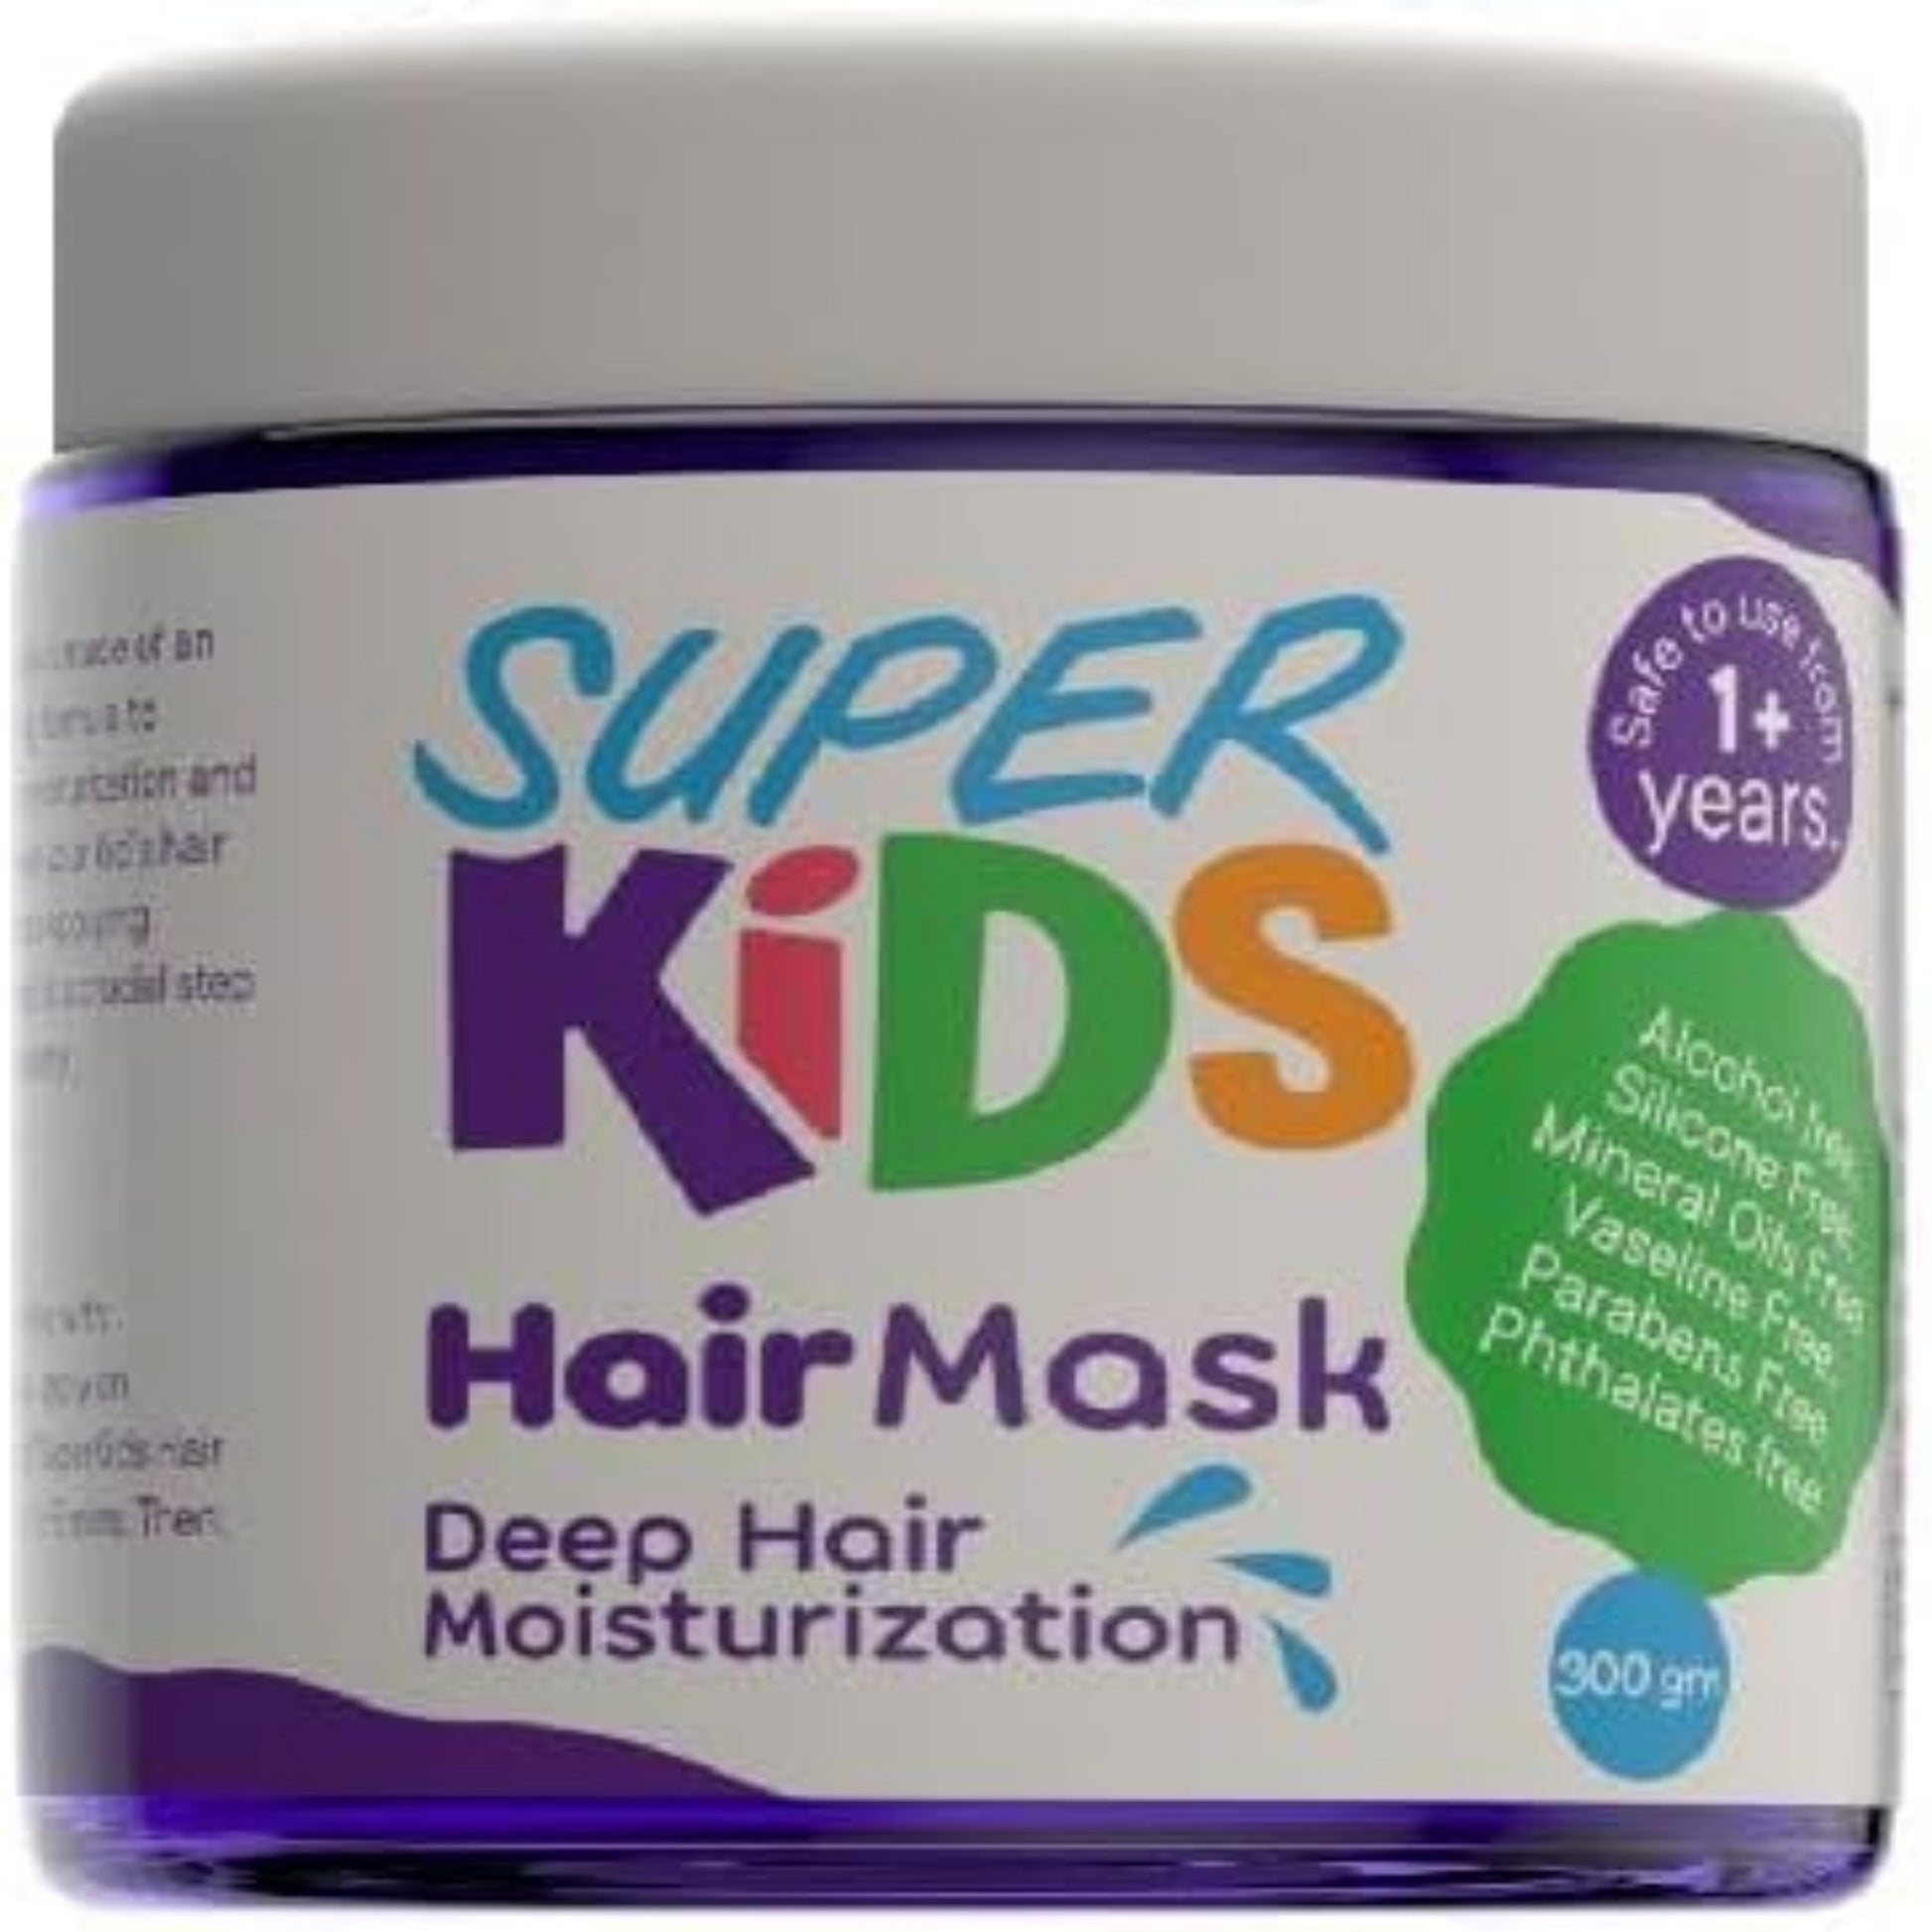 super kids hair mask deep hair moisturization ماسك الشعر للاطفال من سوبر كيدز لترطيب الشعر بعمق